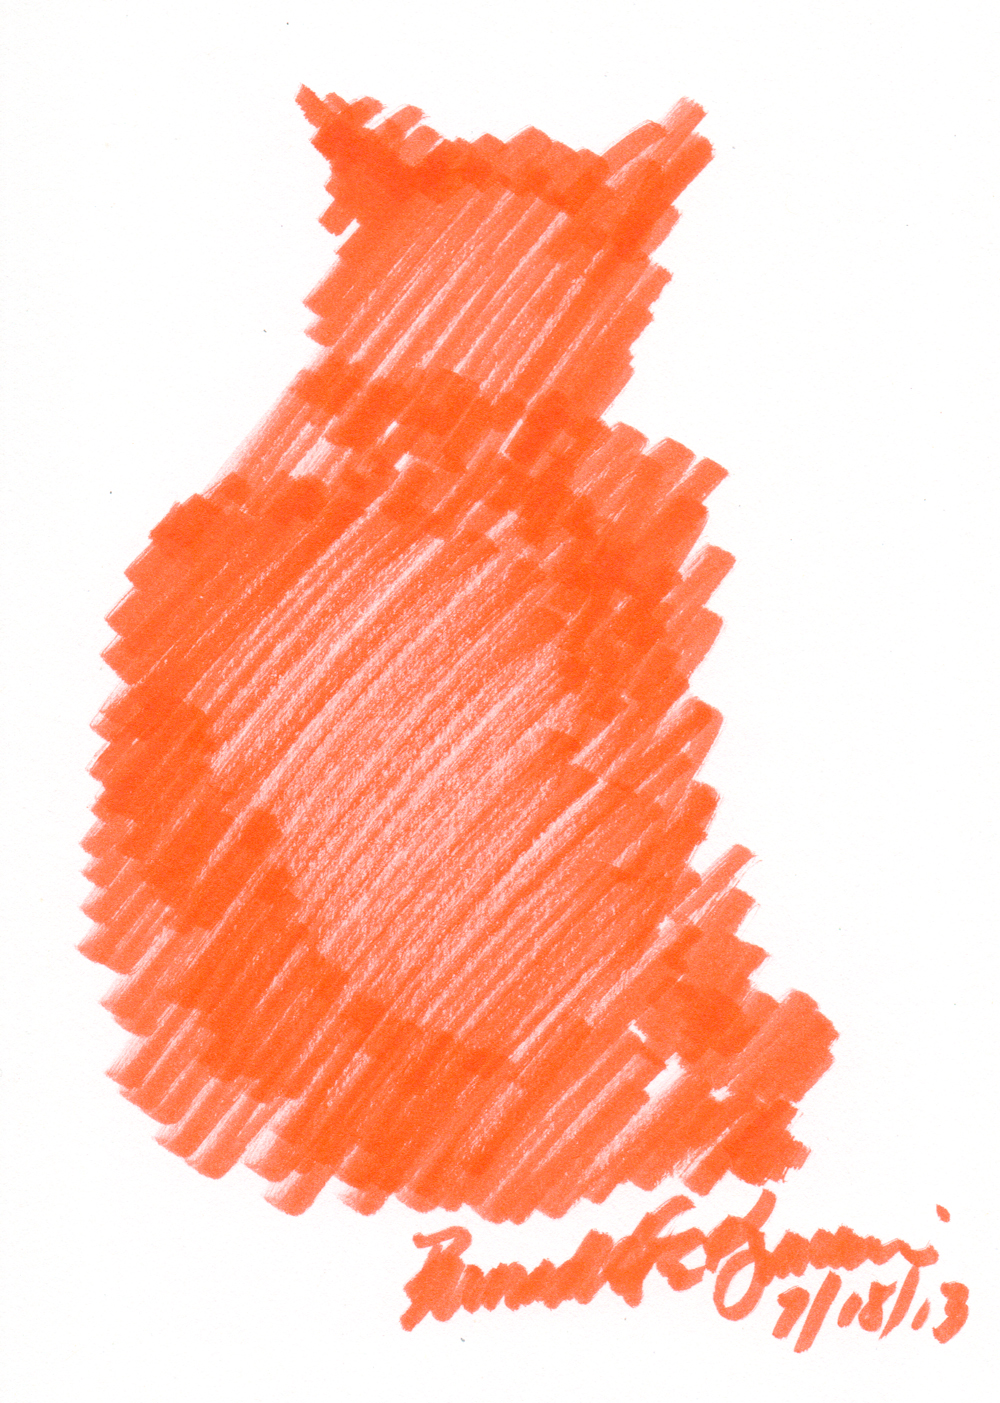 marker sketch of cat silhouette in orange